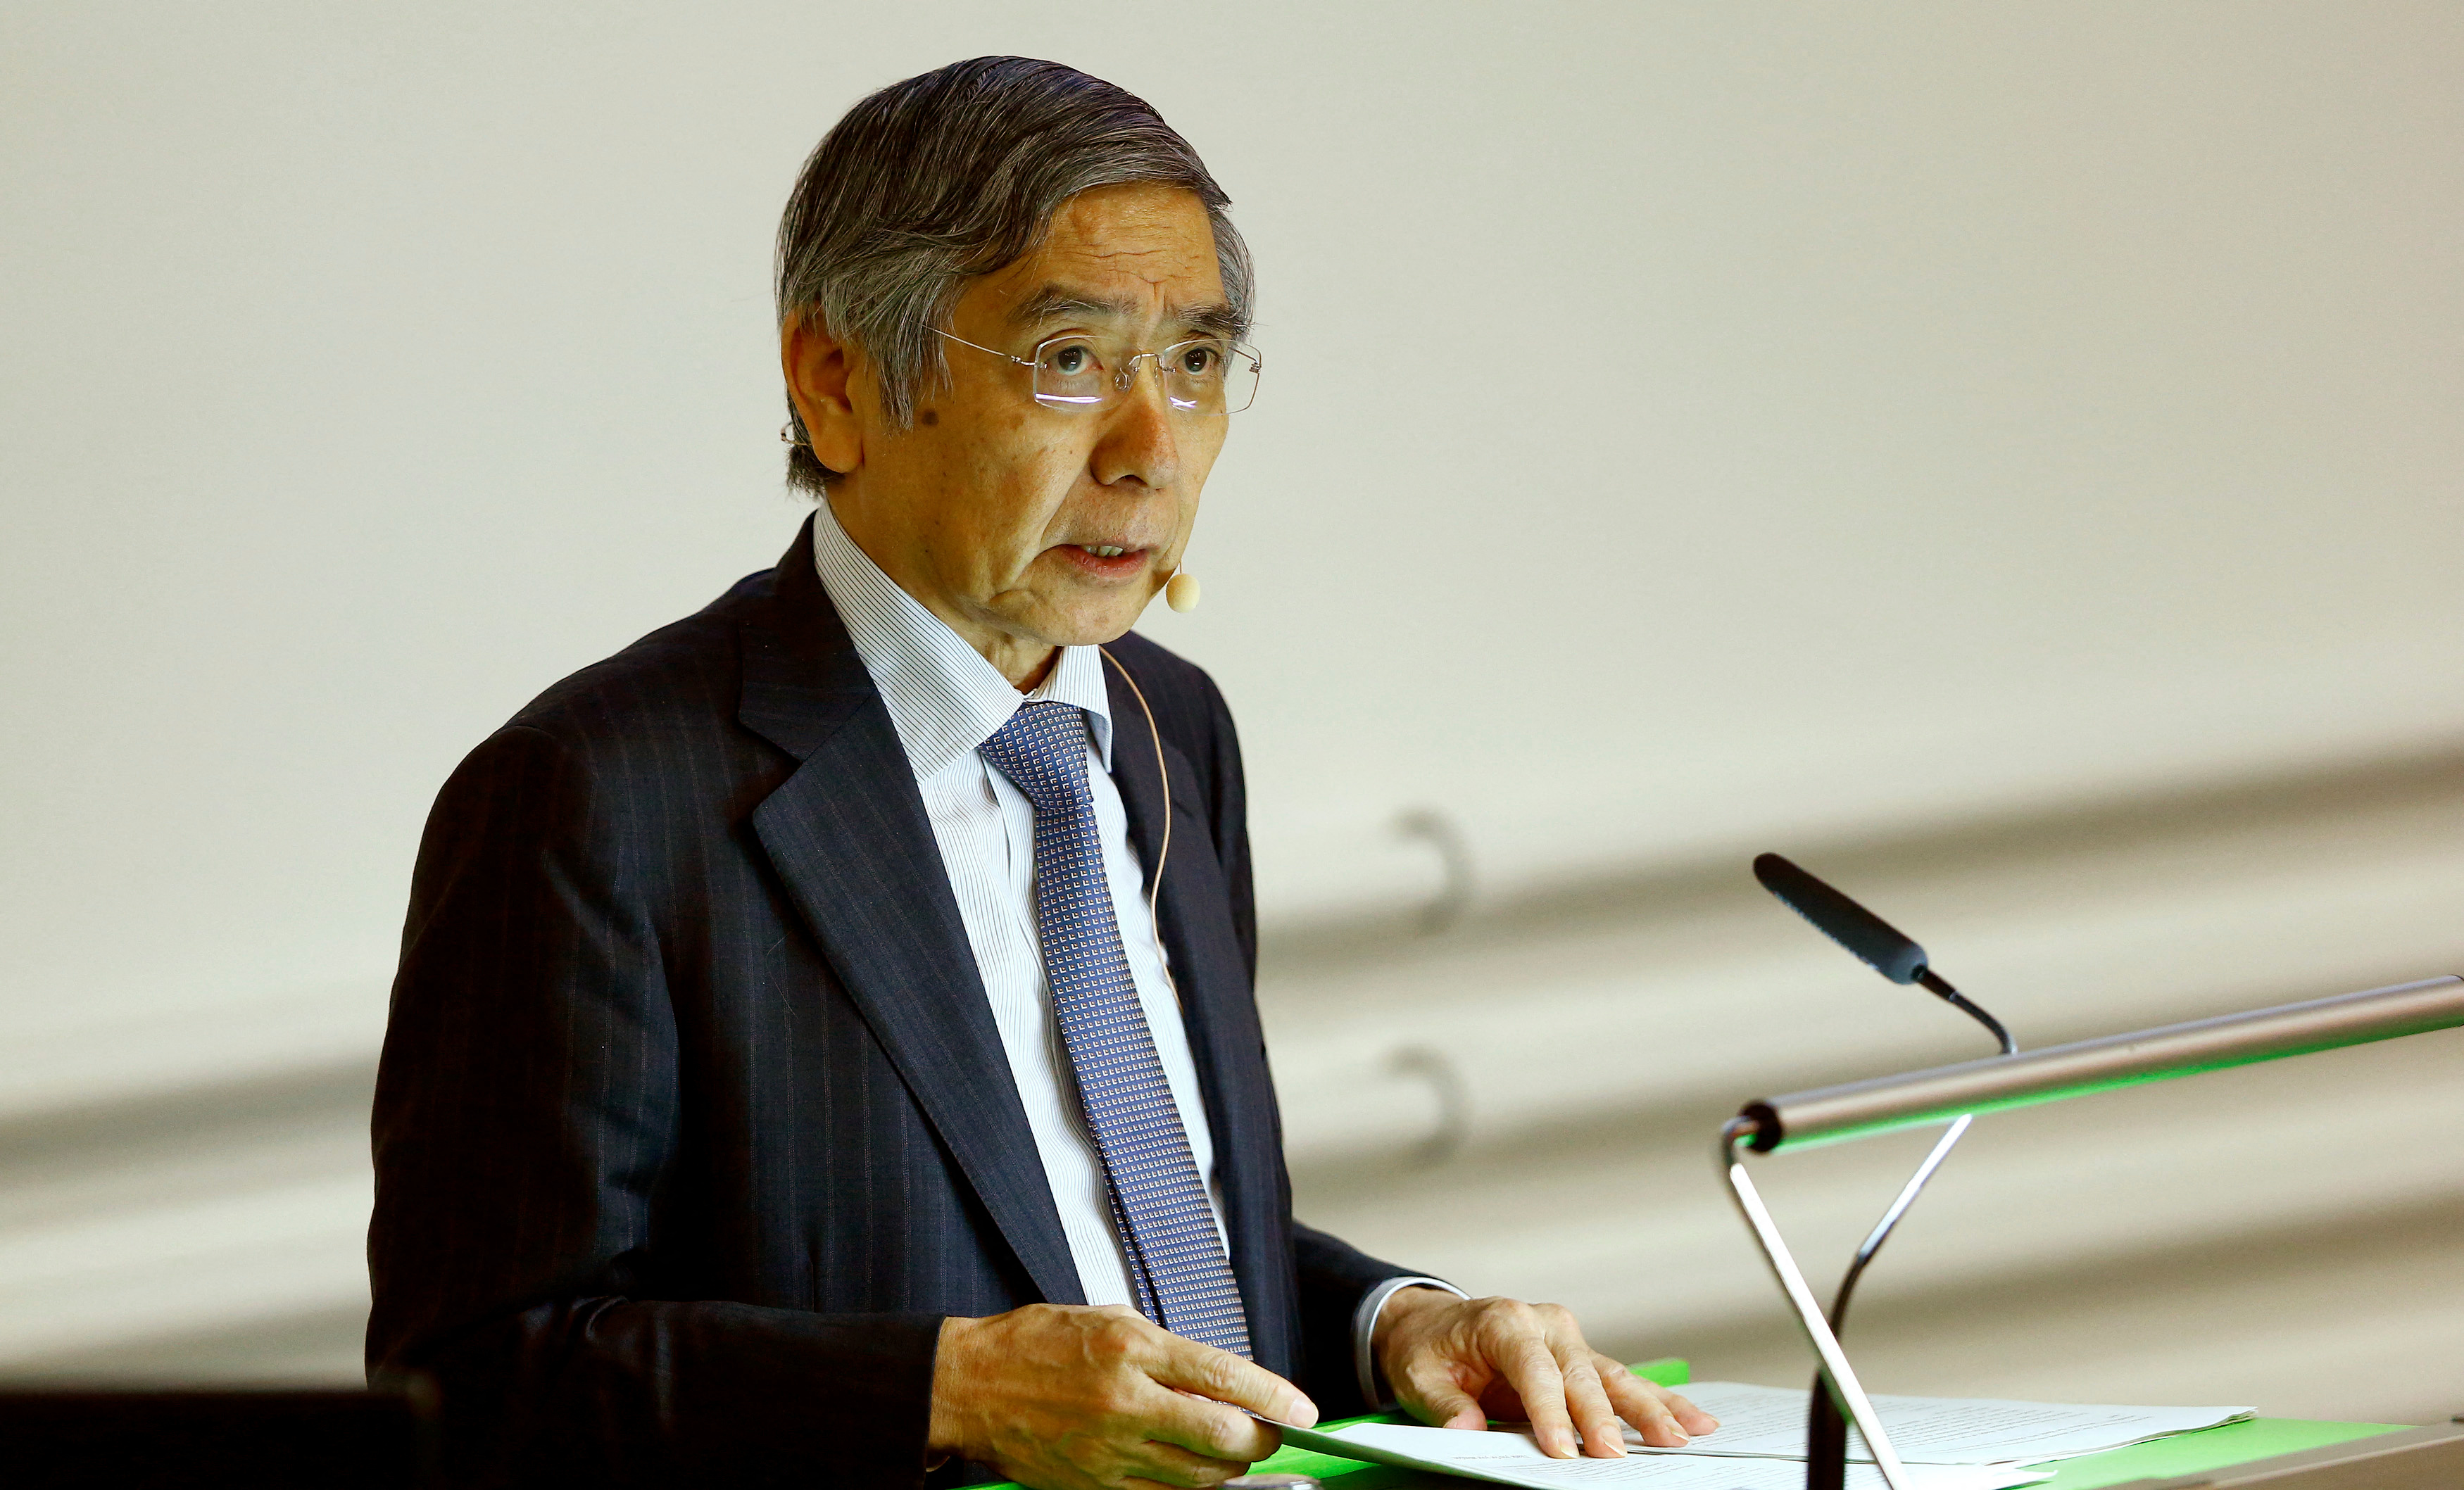 Bank of Japan Governor Kuroda makes a speech at the University of Zurich